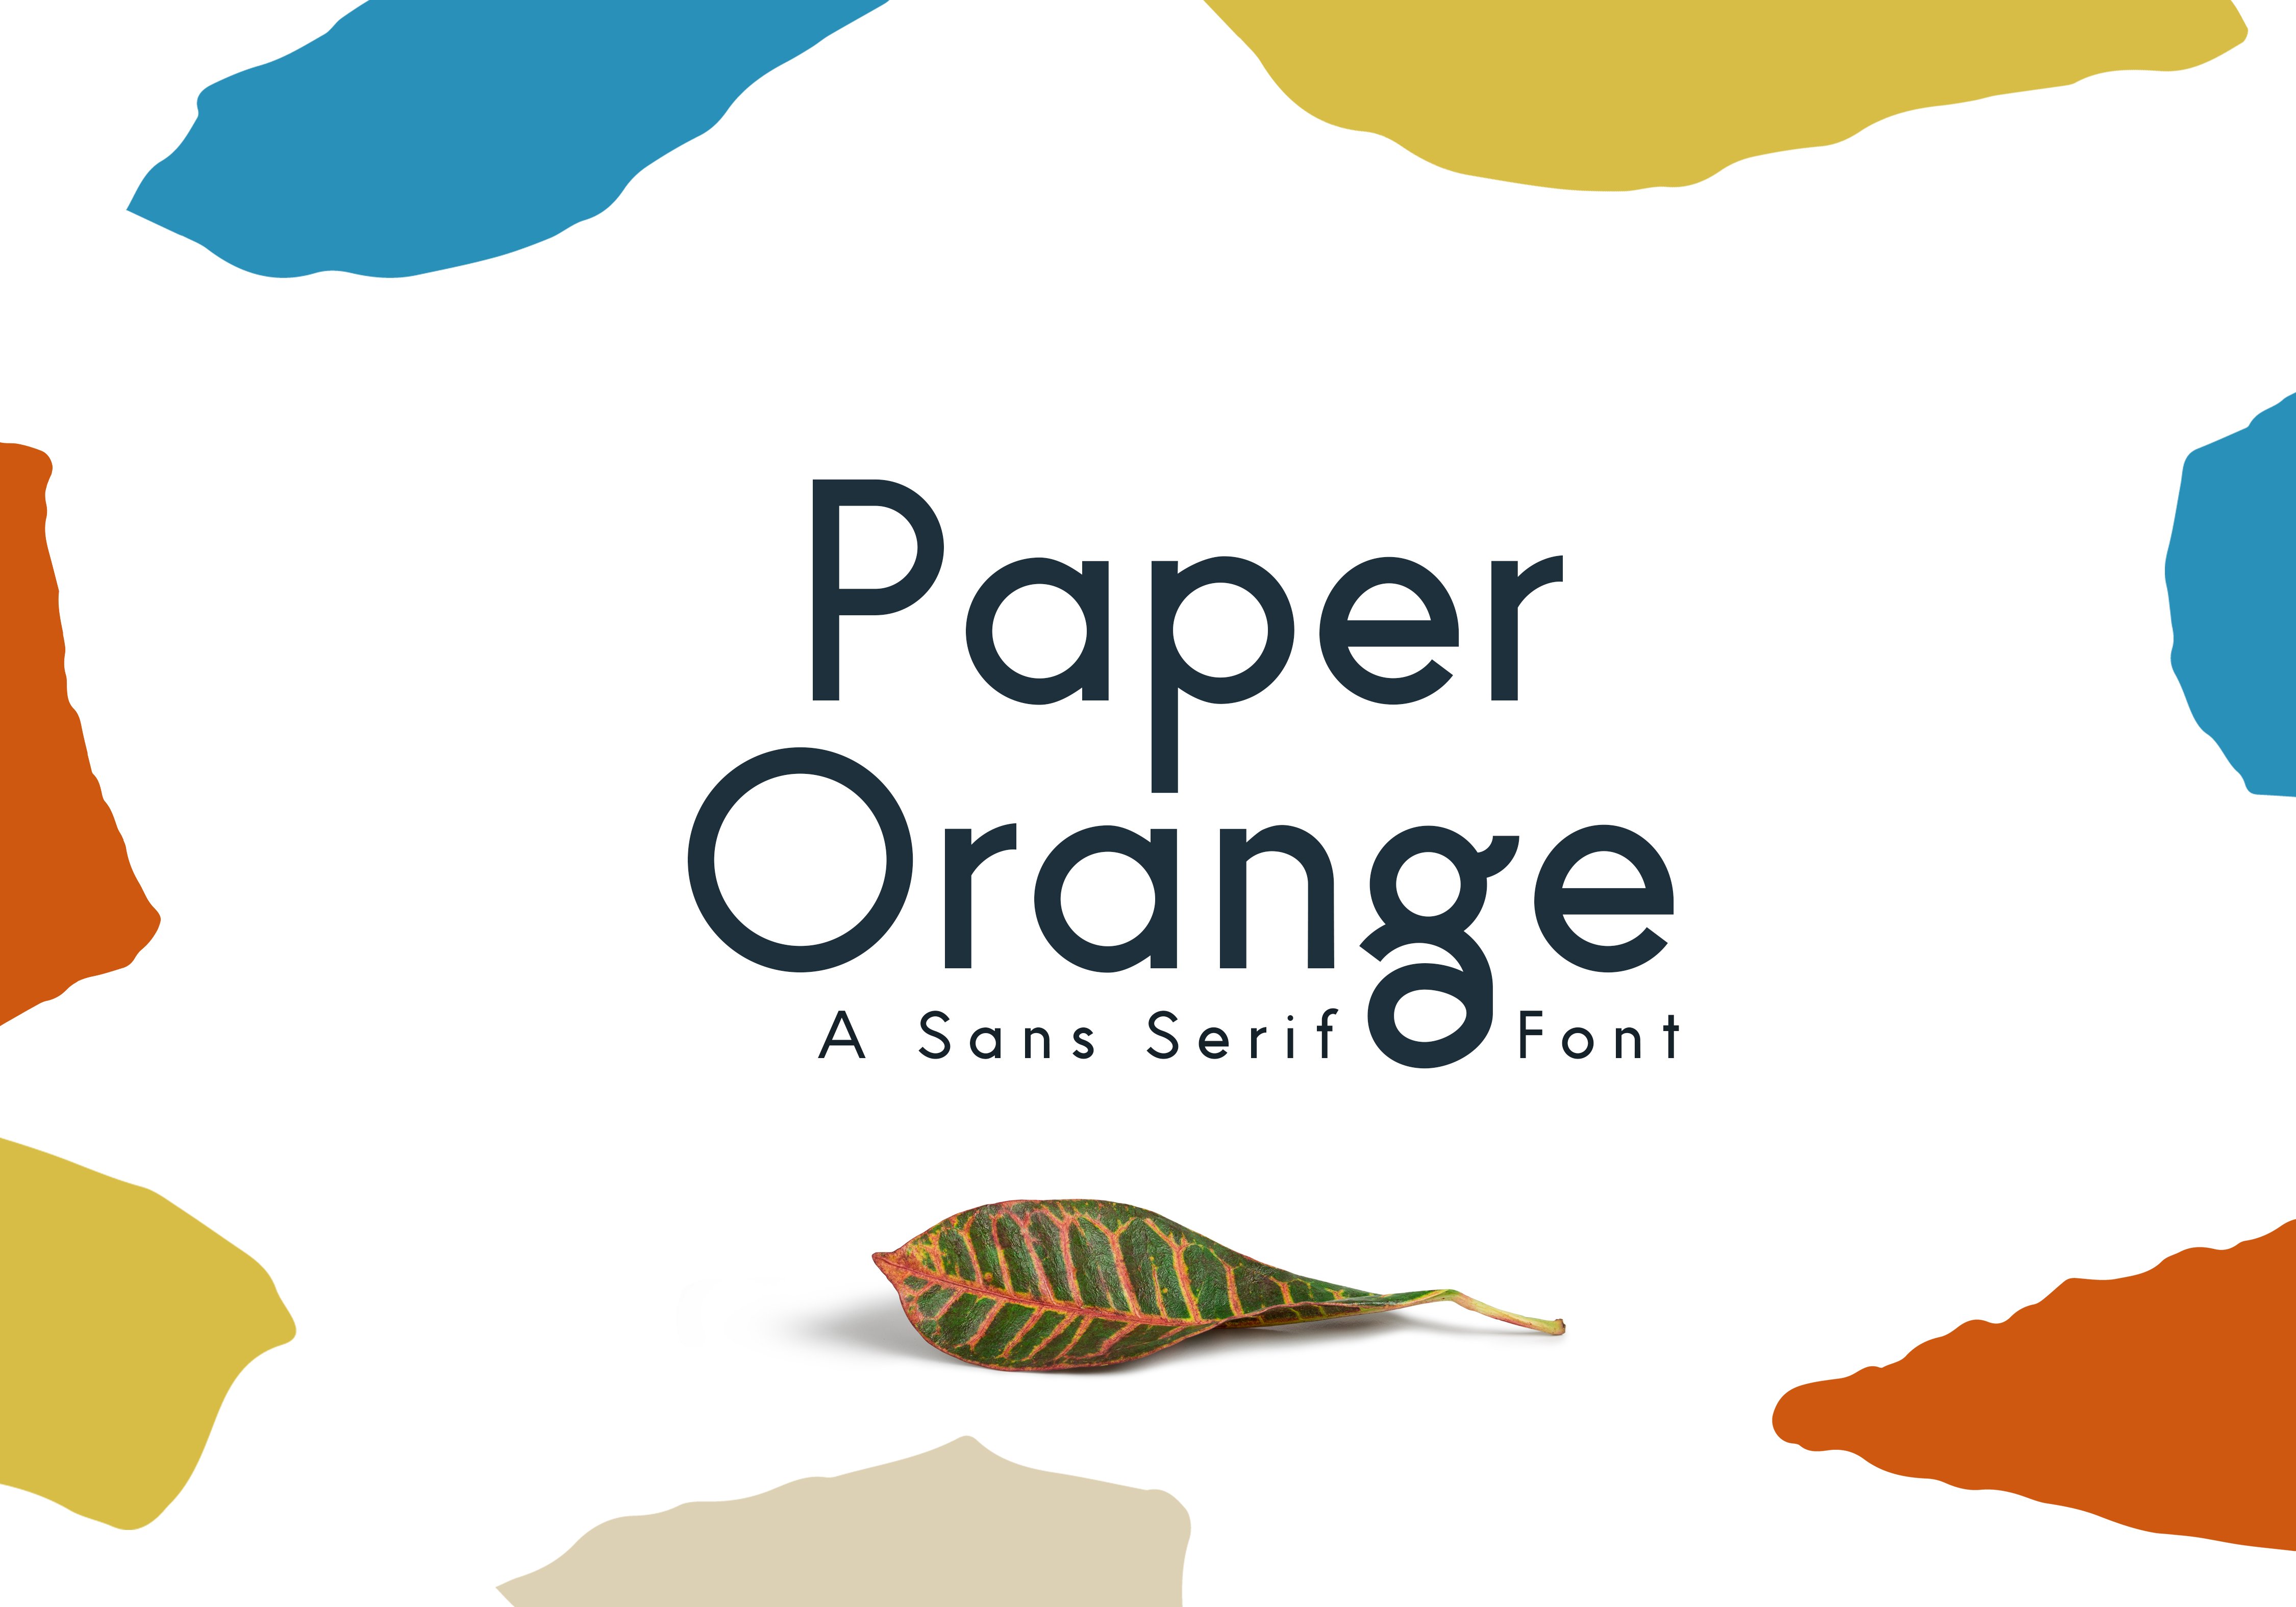 Paper Orange Font Family cover image.